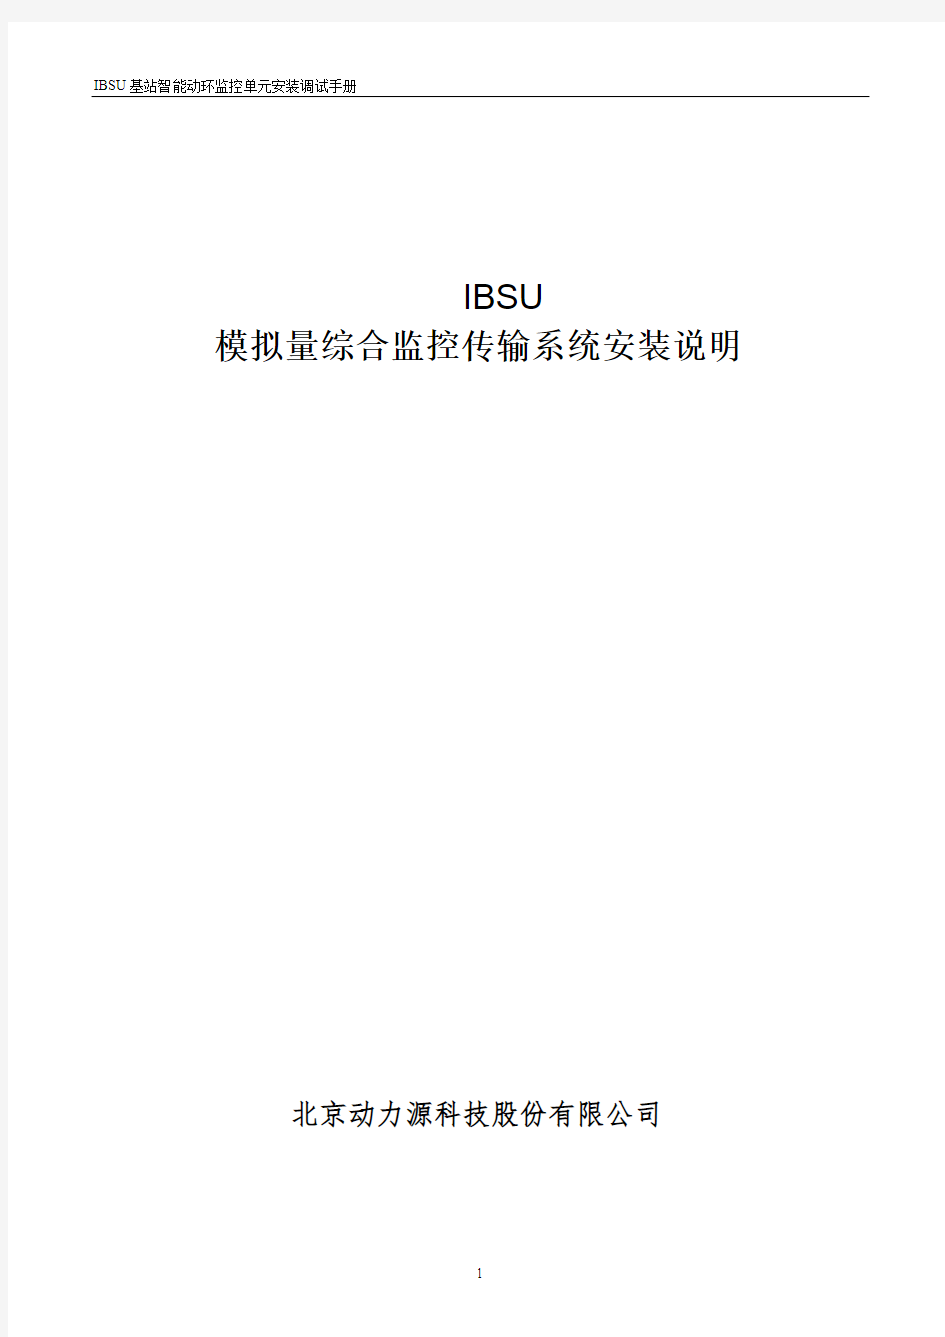 IBSU基站智能动环监控单元安装指导书20150429